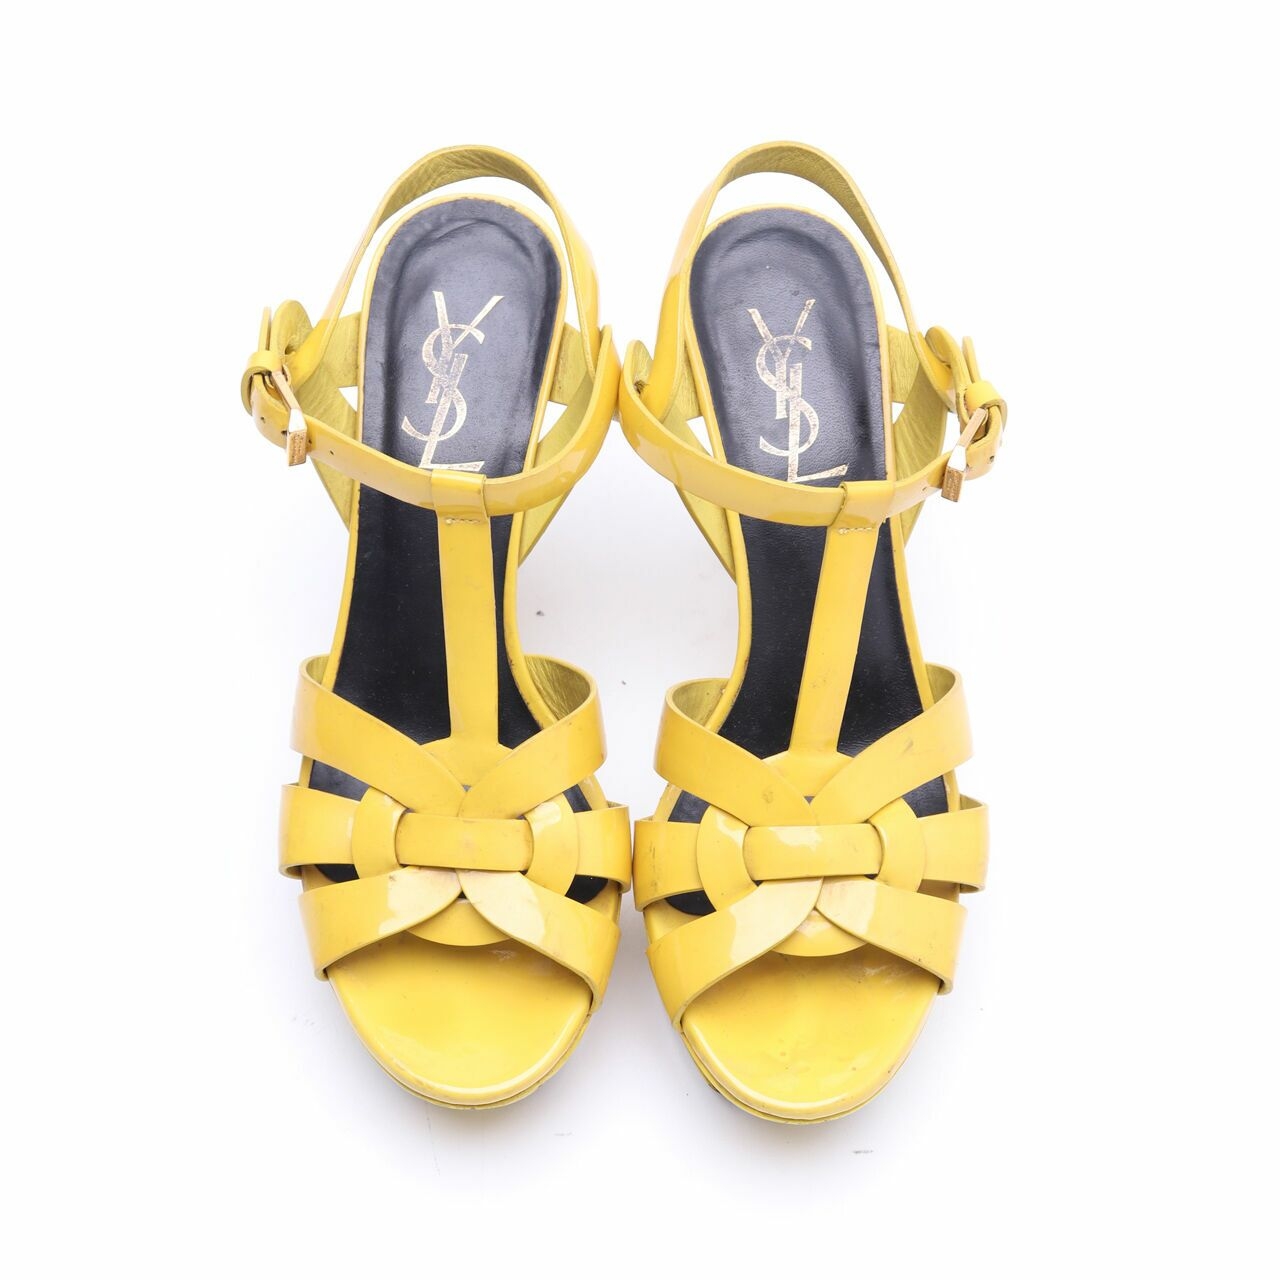 Yves Saint Laurent Tribute Yellow Patent Leather Heels